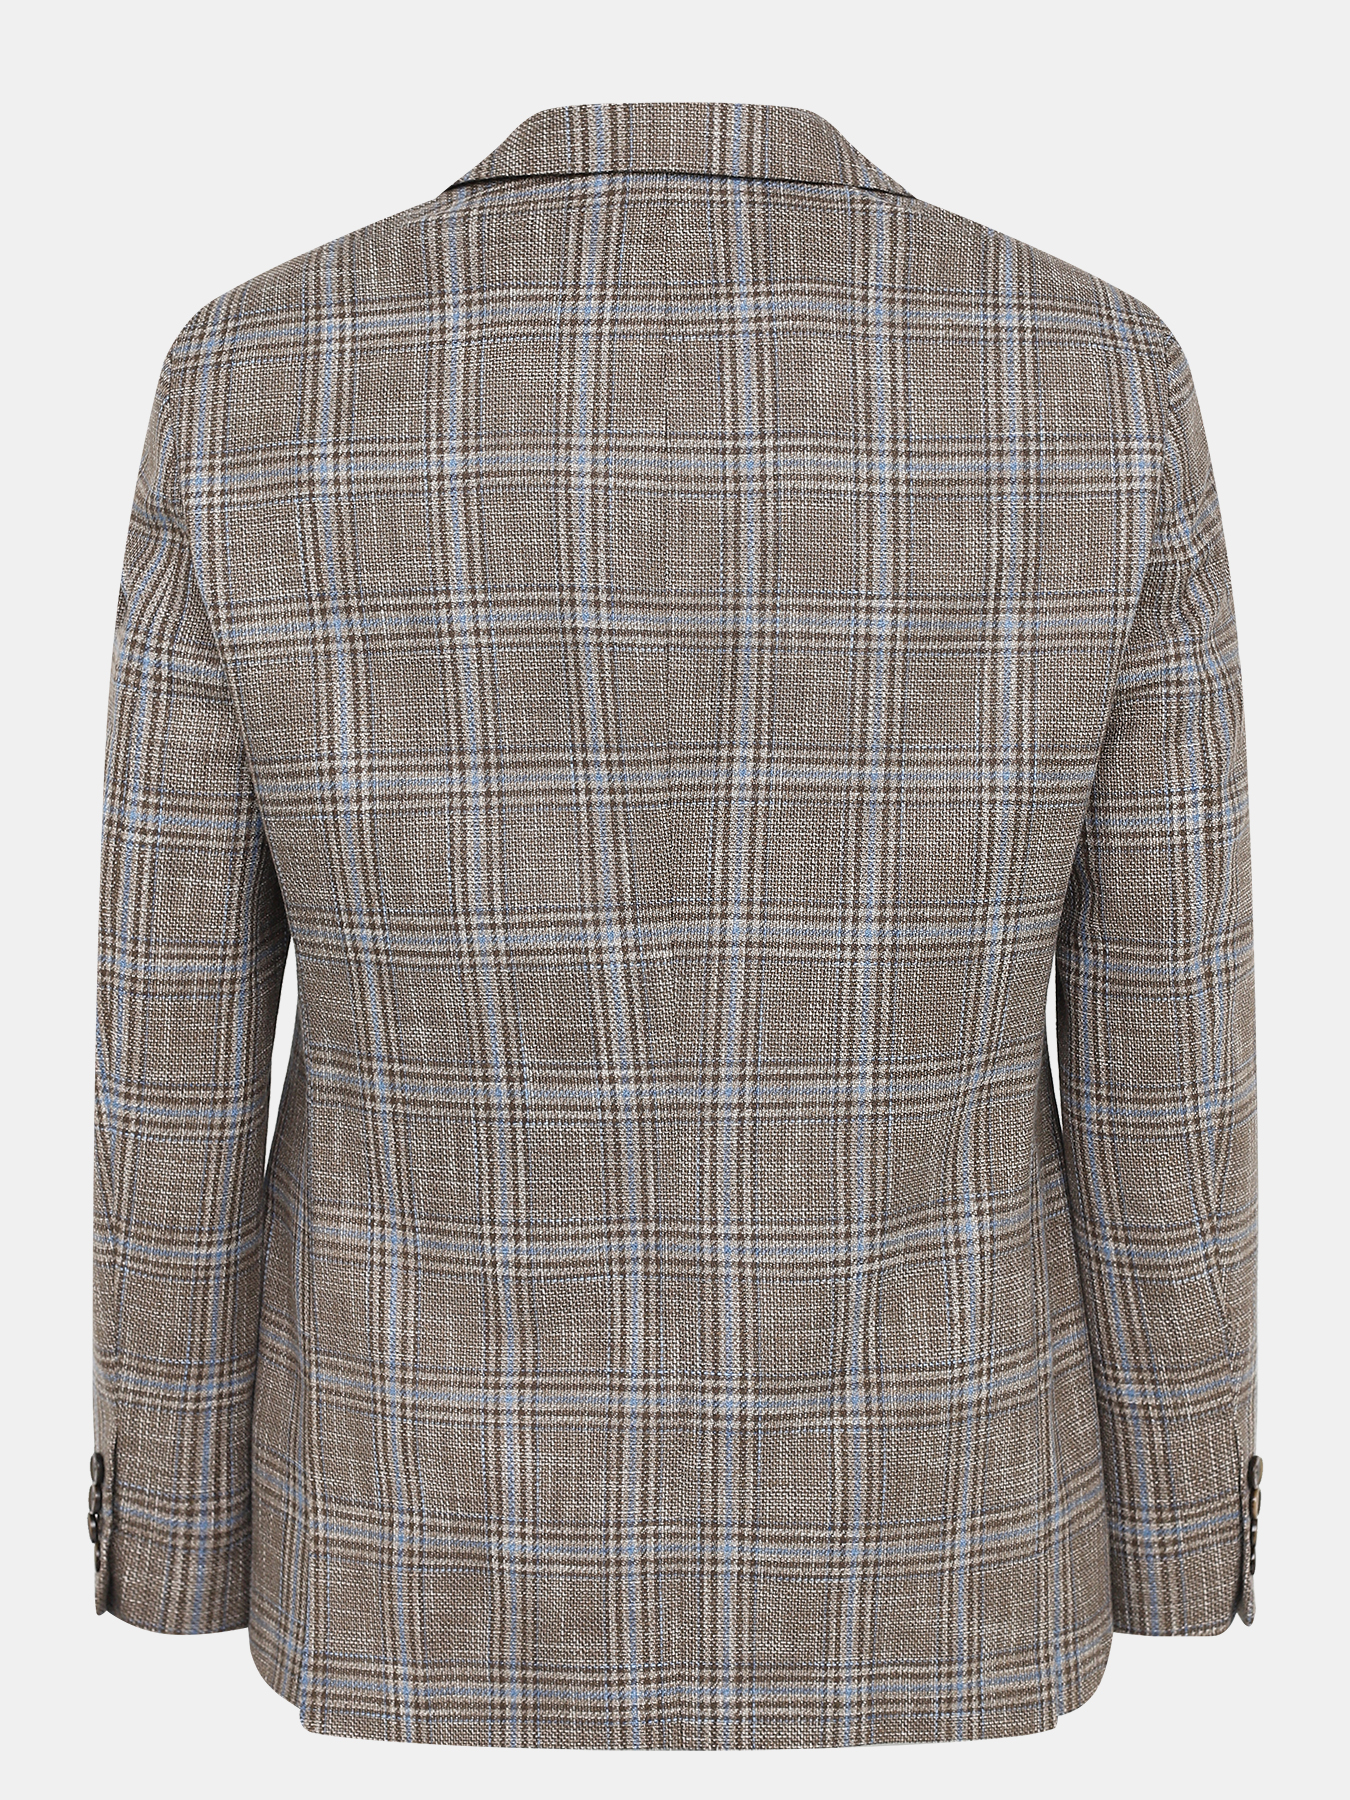 Пиджак Alessandro Manzoni 396179-069, цвет коричневый, размер 54 - фото 2